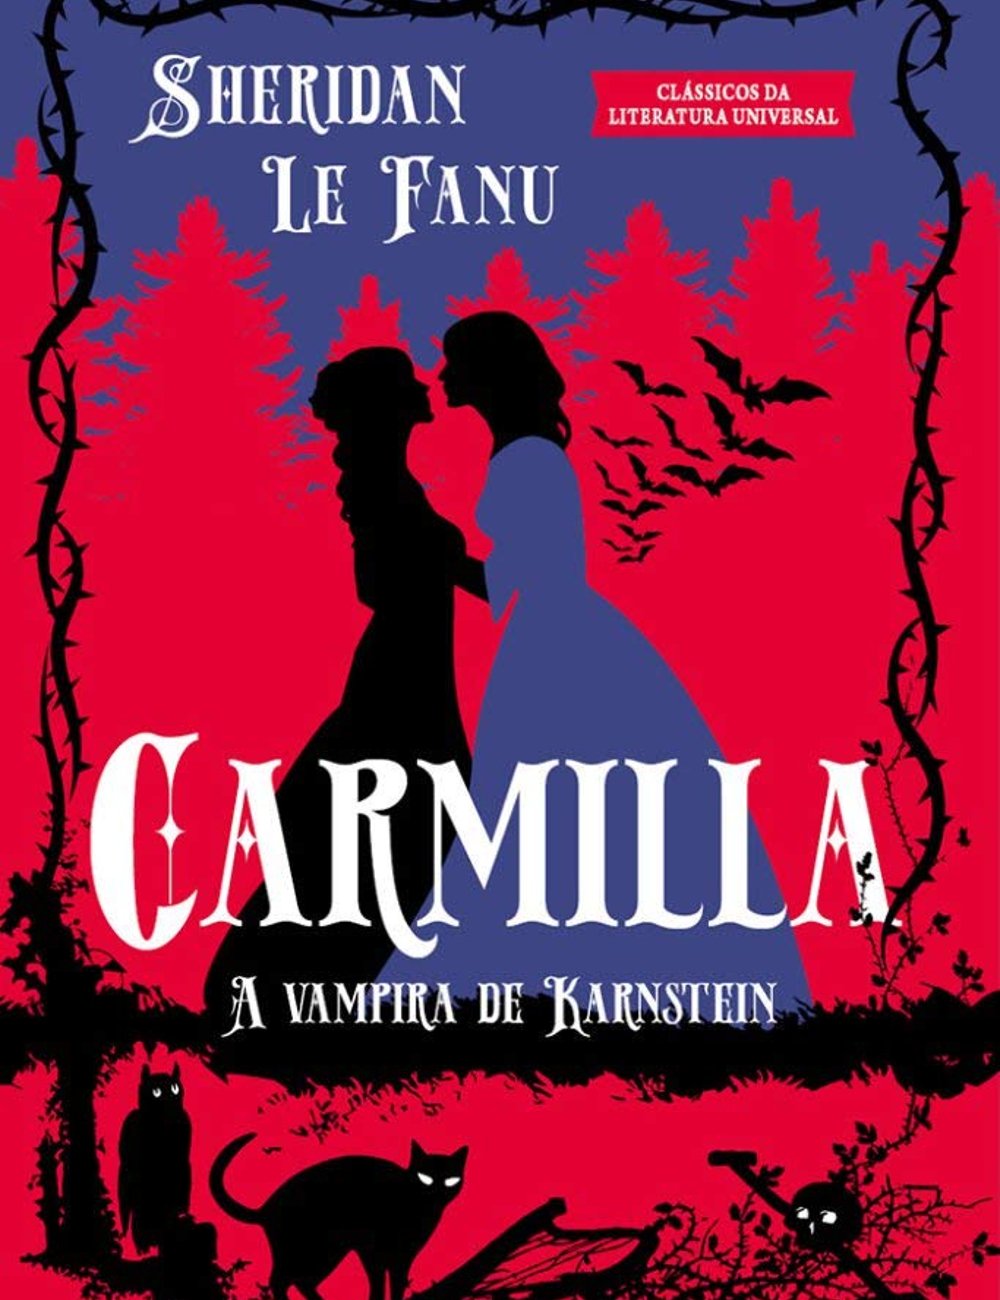 Carmilla: a Vampira de Karnstein - livros LGBTQIA+ - livros LGBTQIA+ - livros LGBTQIA+ - livros LGBTQIA+ - https://stealthelook.com.br